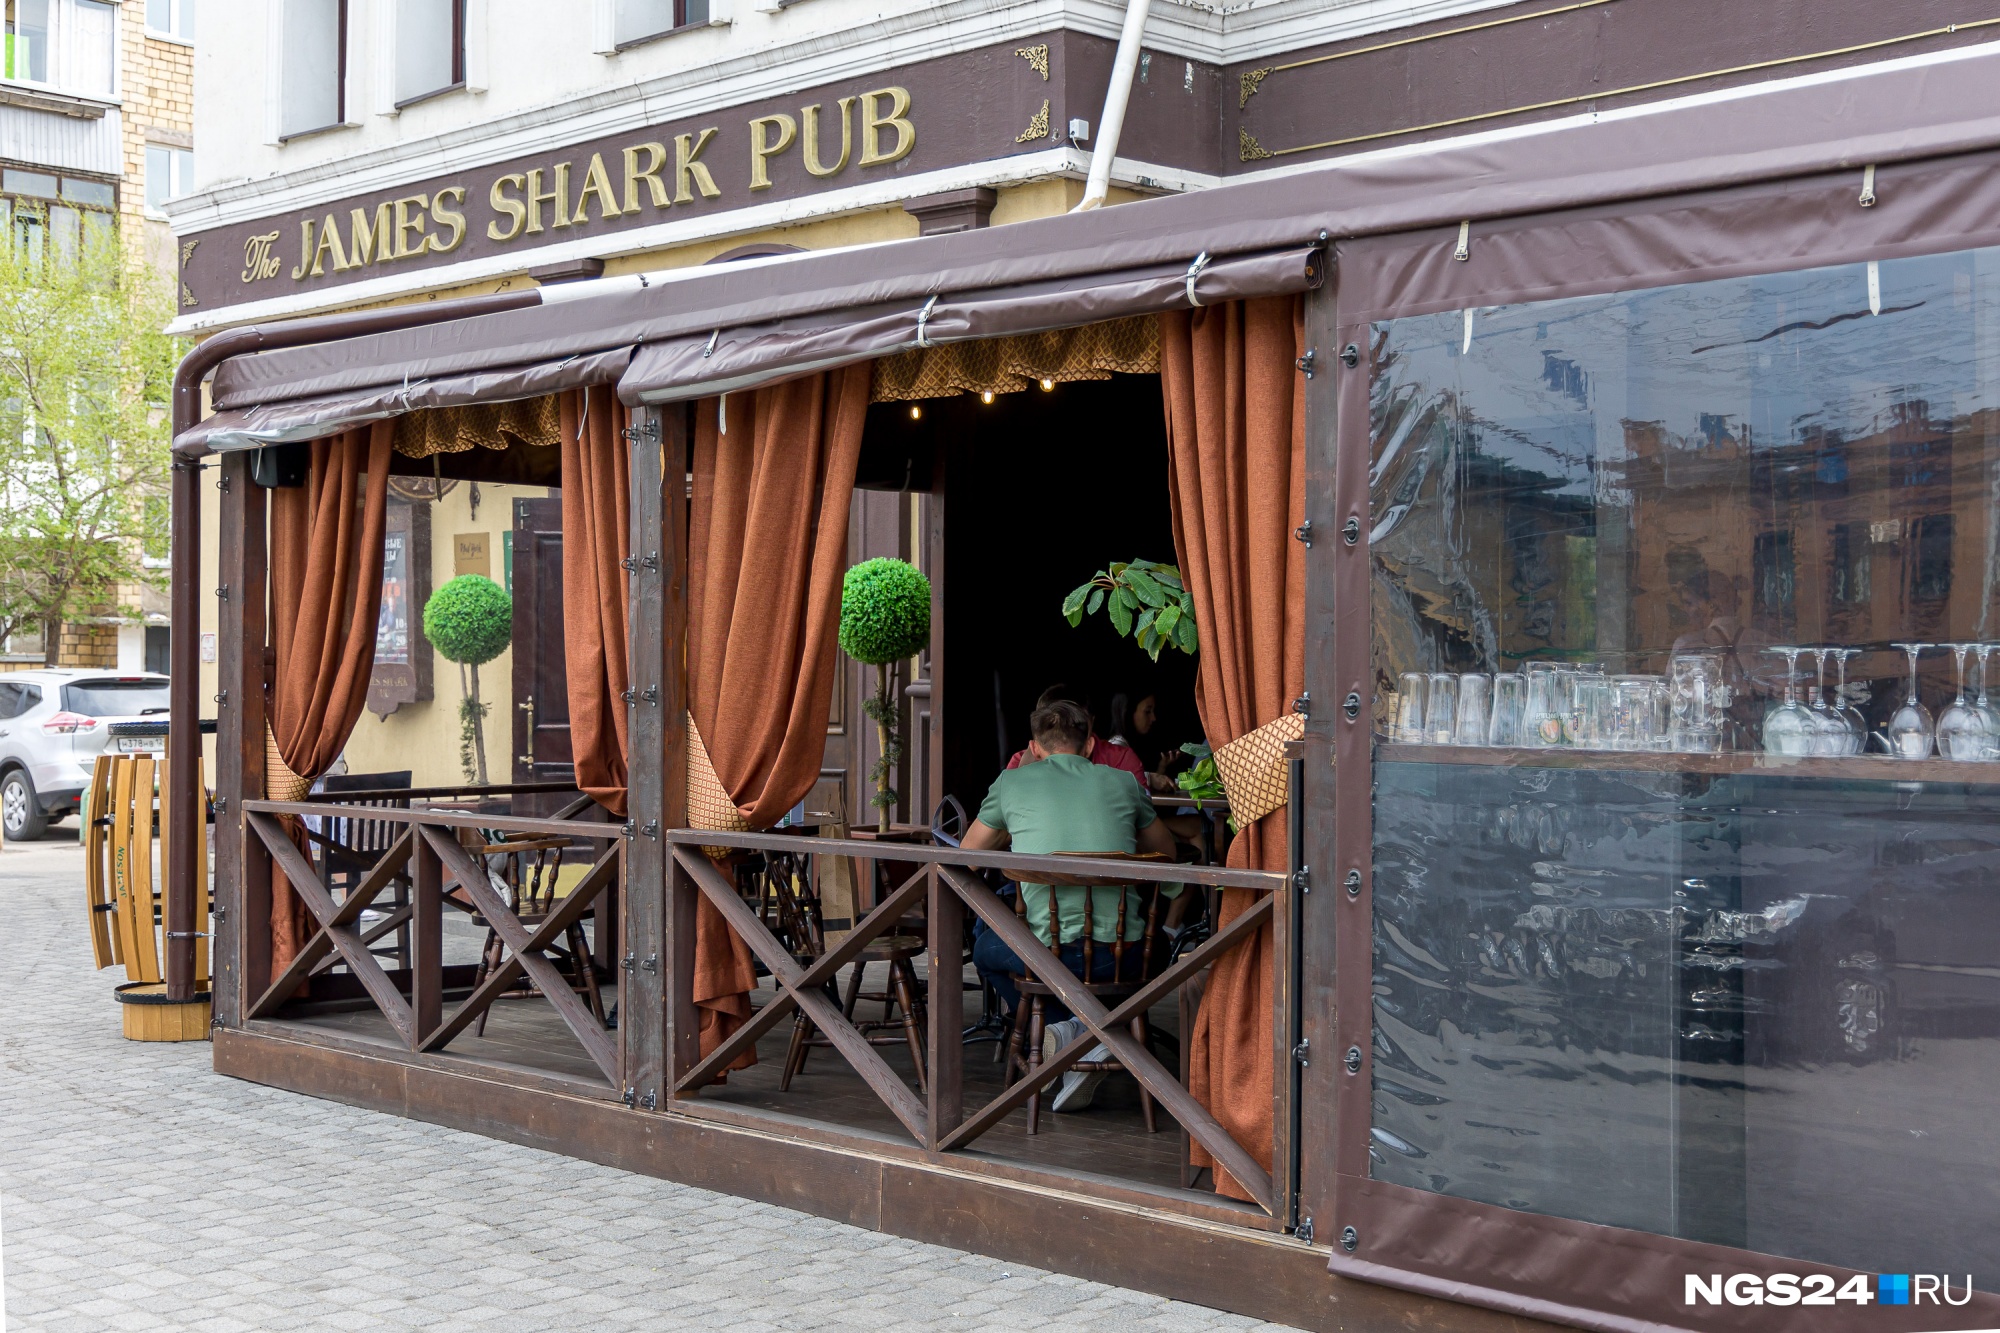 «Летка» The James Dhark Pub открылась одной из первых